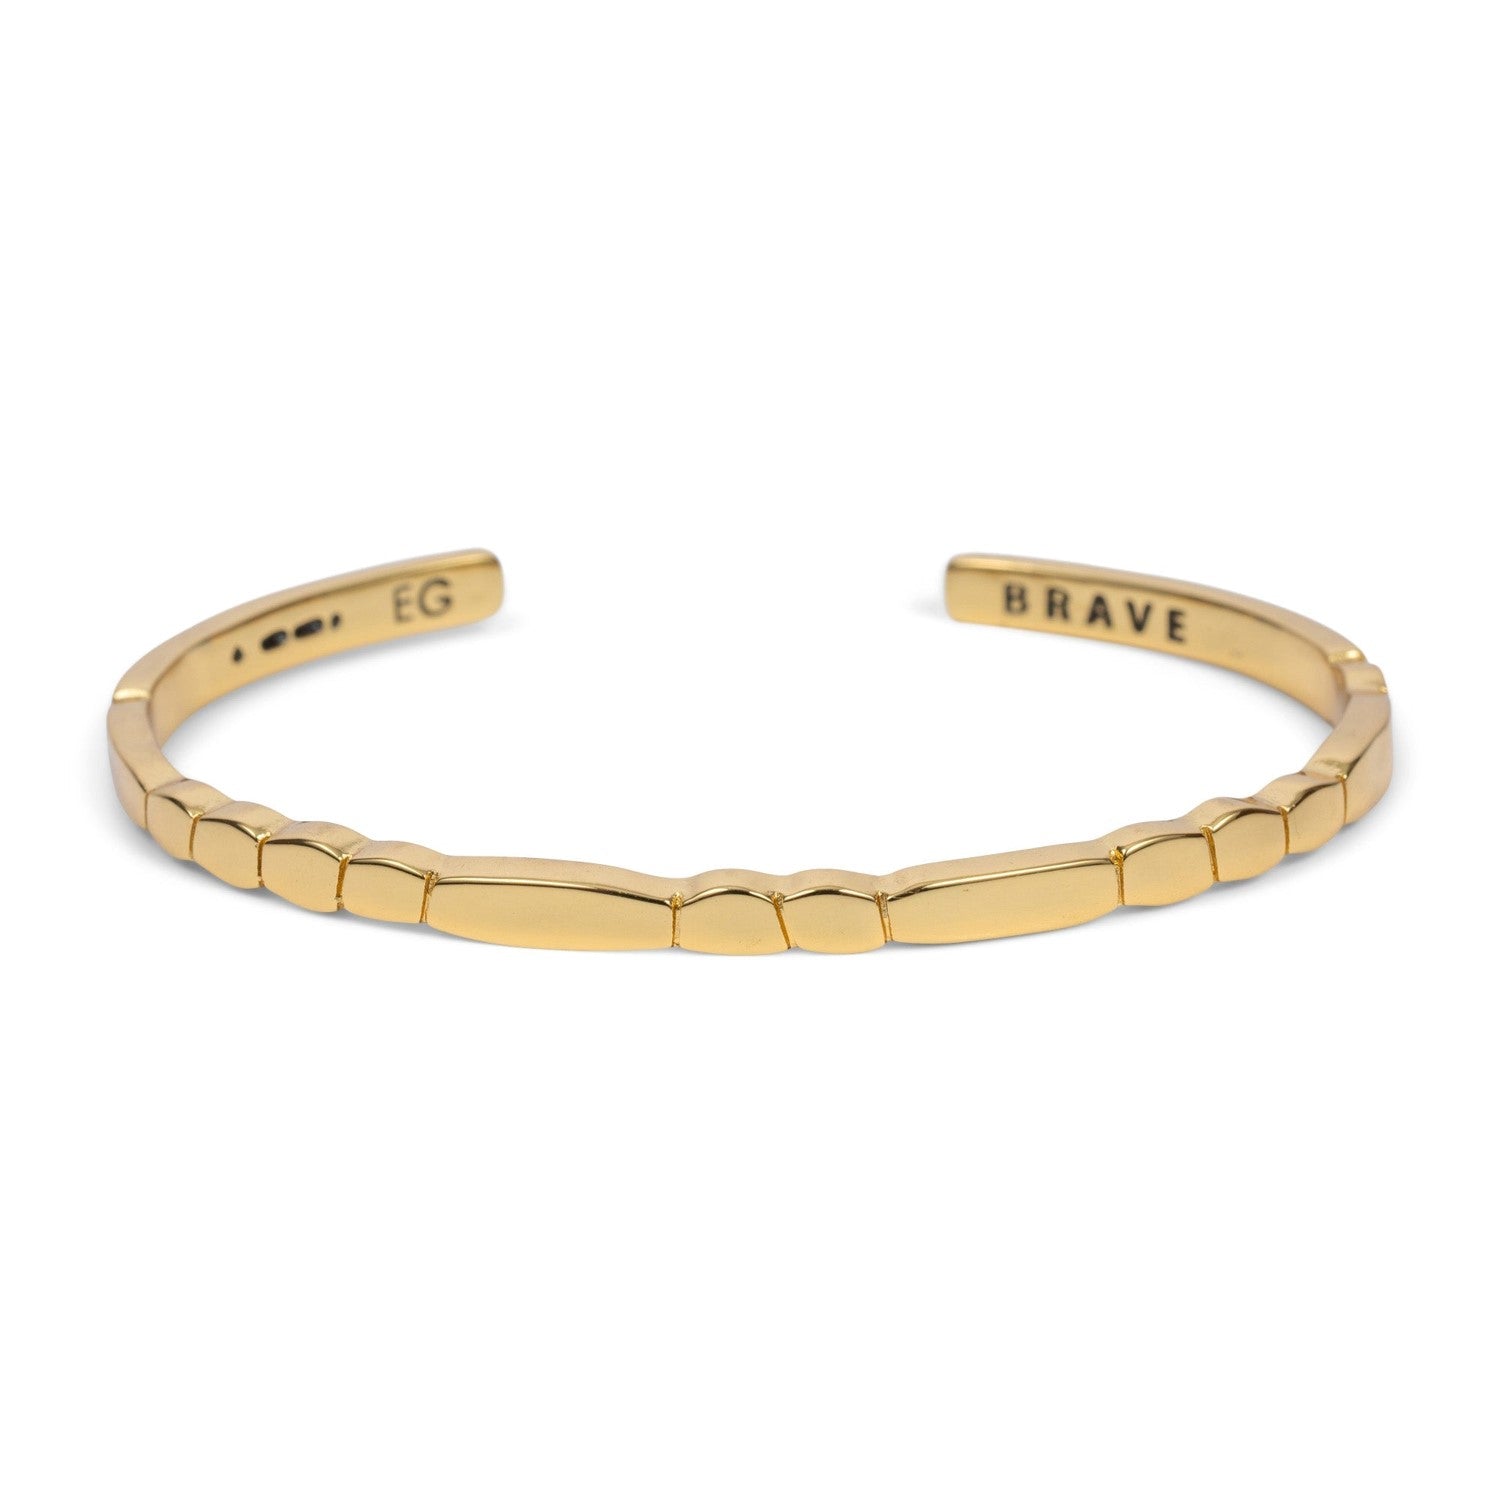 Morse Code Gold Cuff Bracelet - Brave